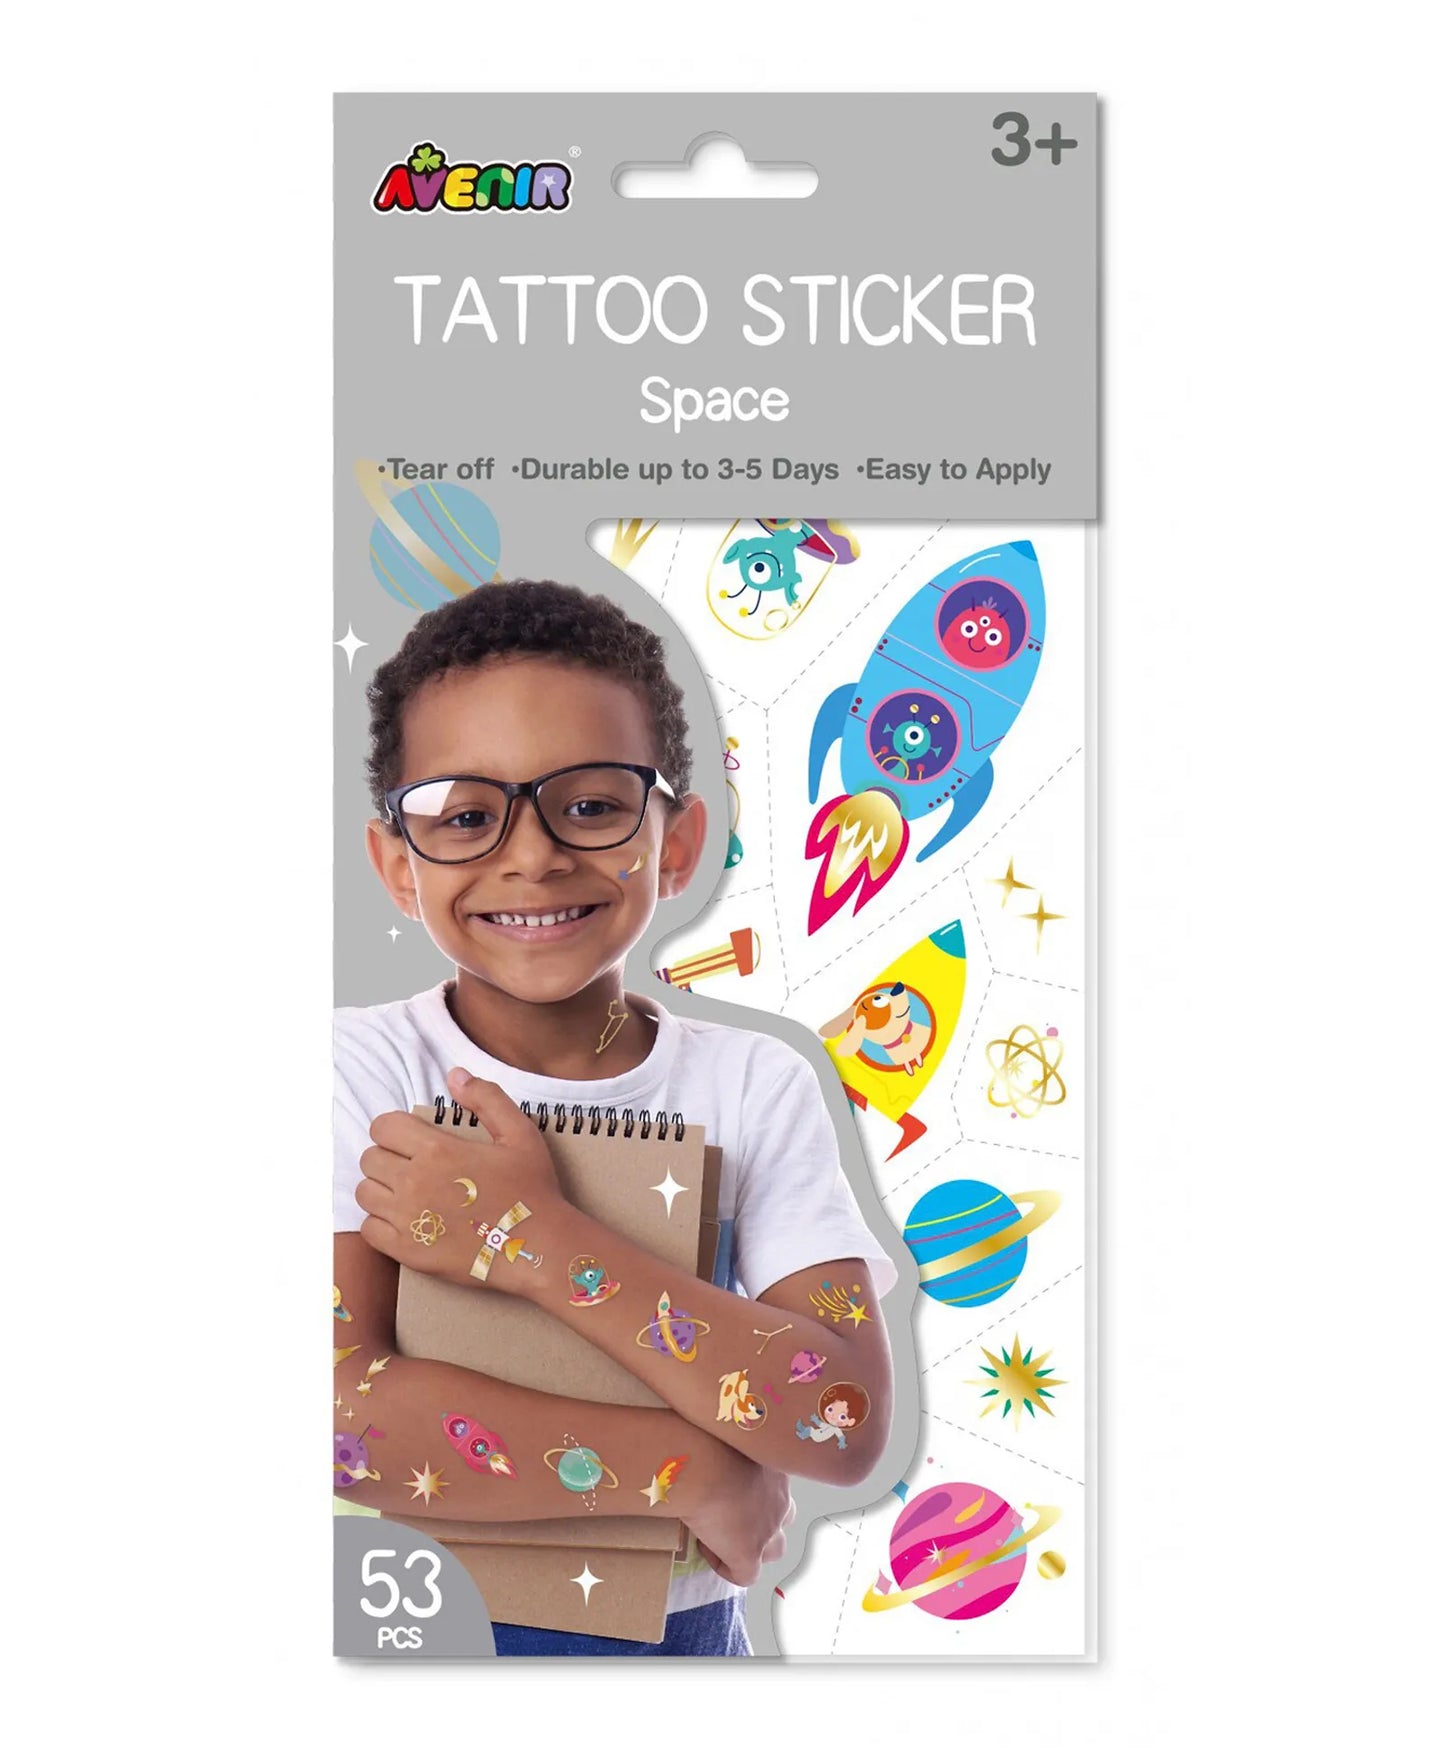 Avenir Tattoo Sticker - Space - 53pc - Laadlee